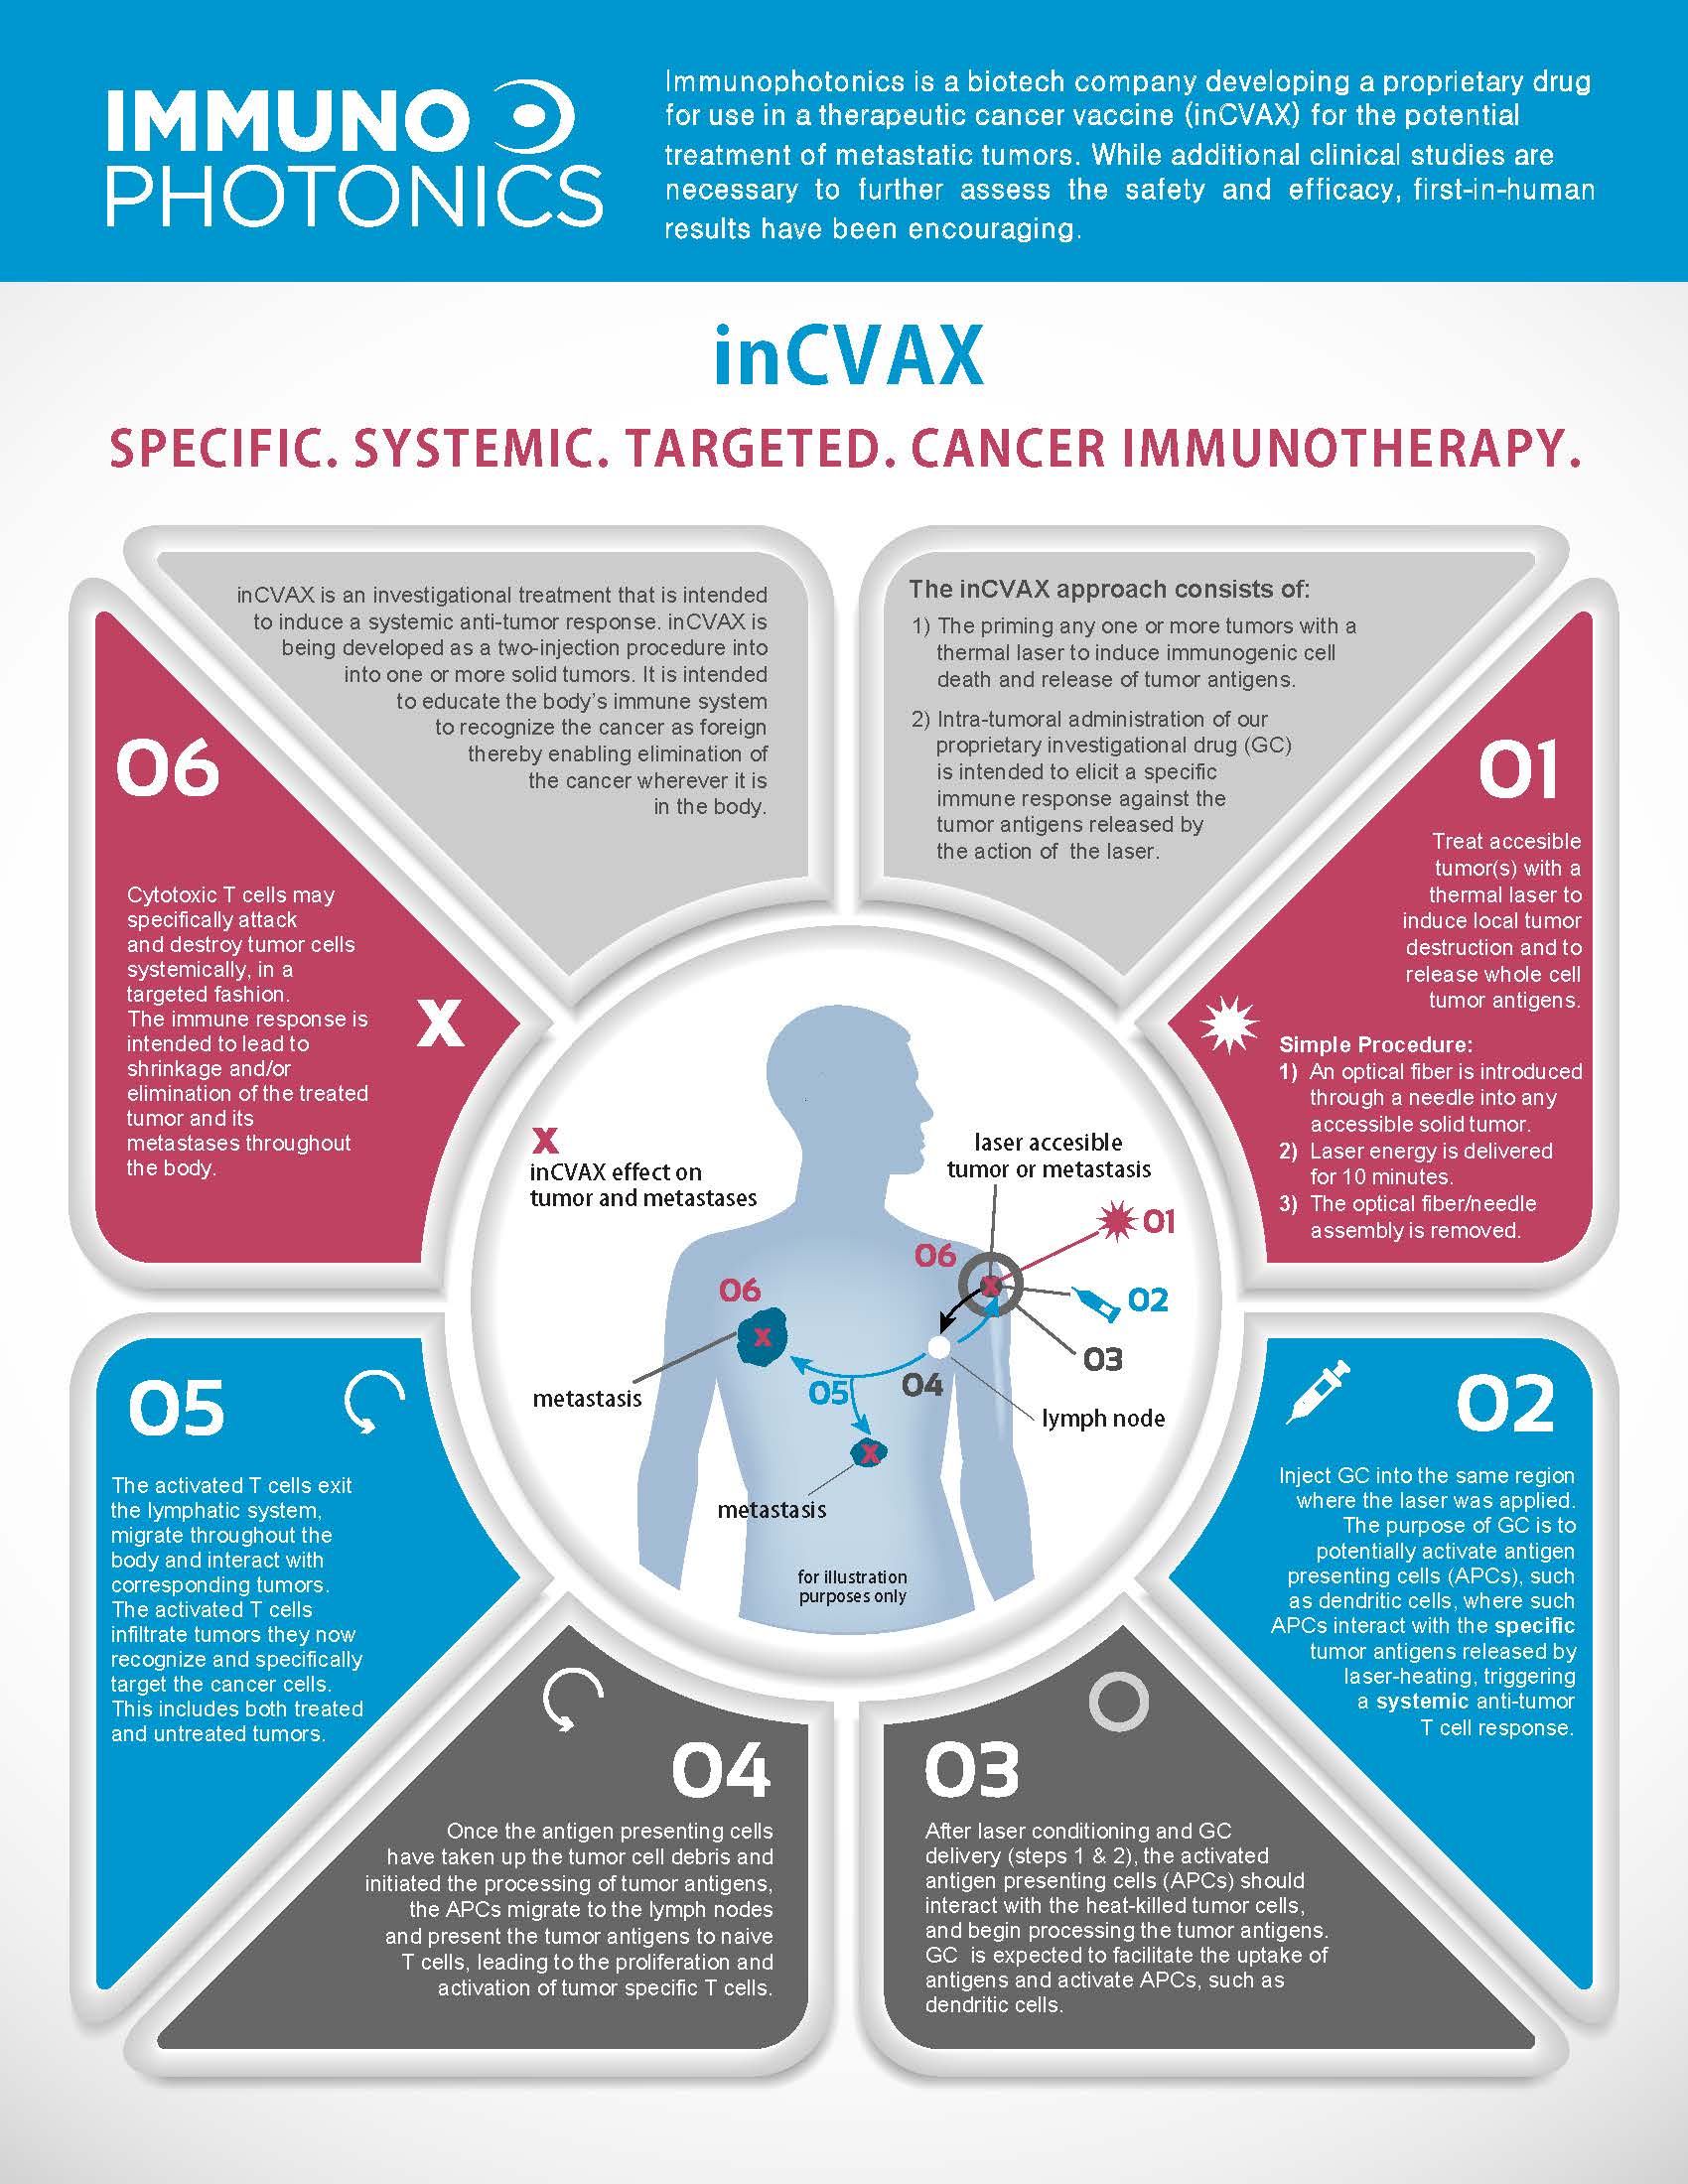 Immunophotonics inCVAX Image.jpg